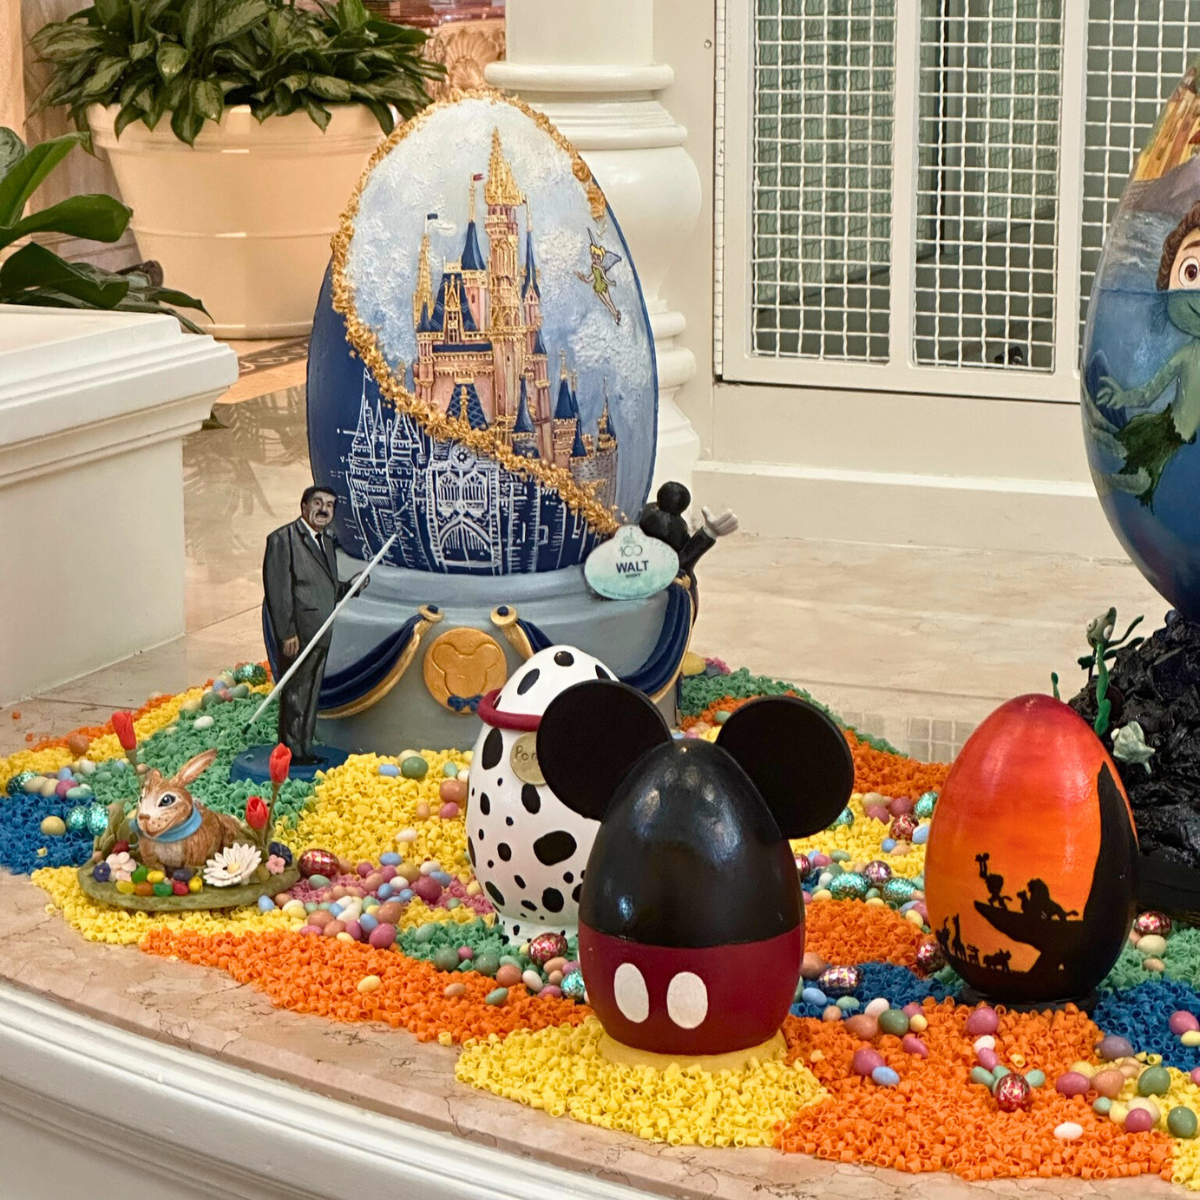 Easter at Disney's Grand Floridian Resort